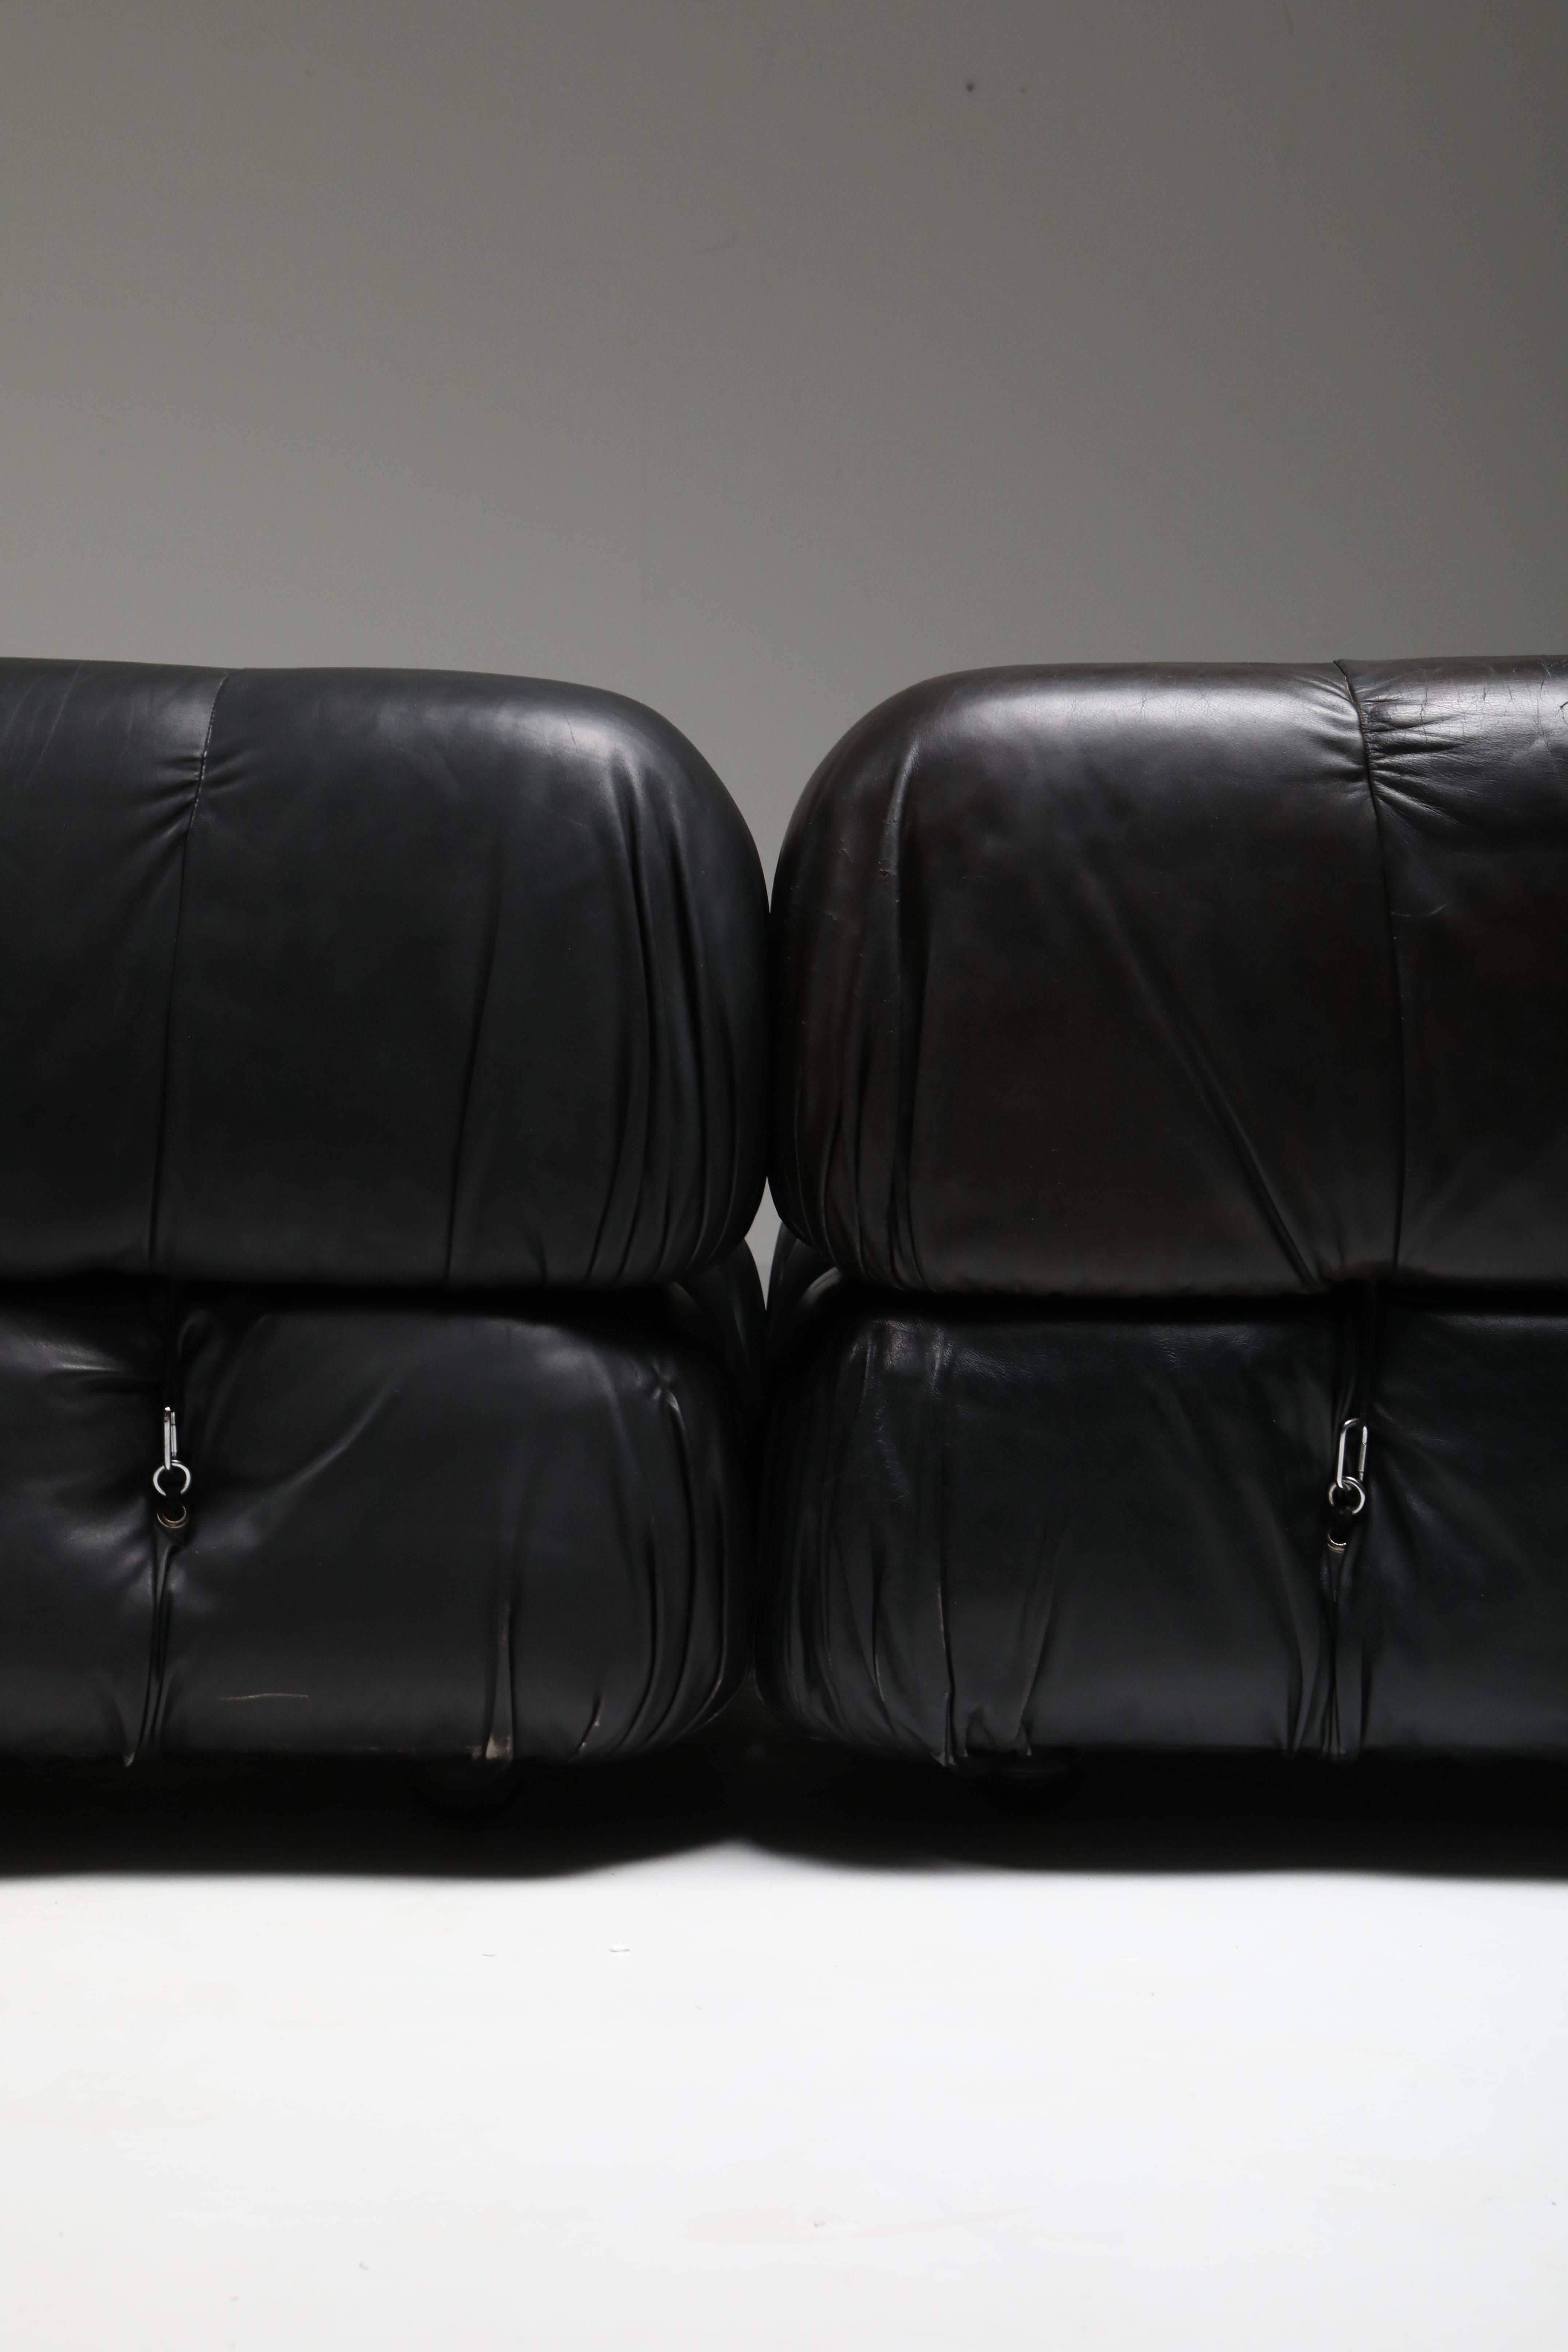 Camaleonda Black Leather Lounge chair 2